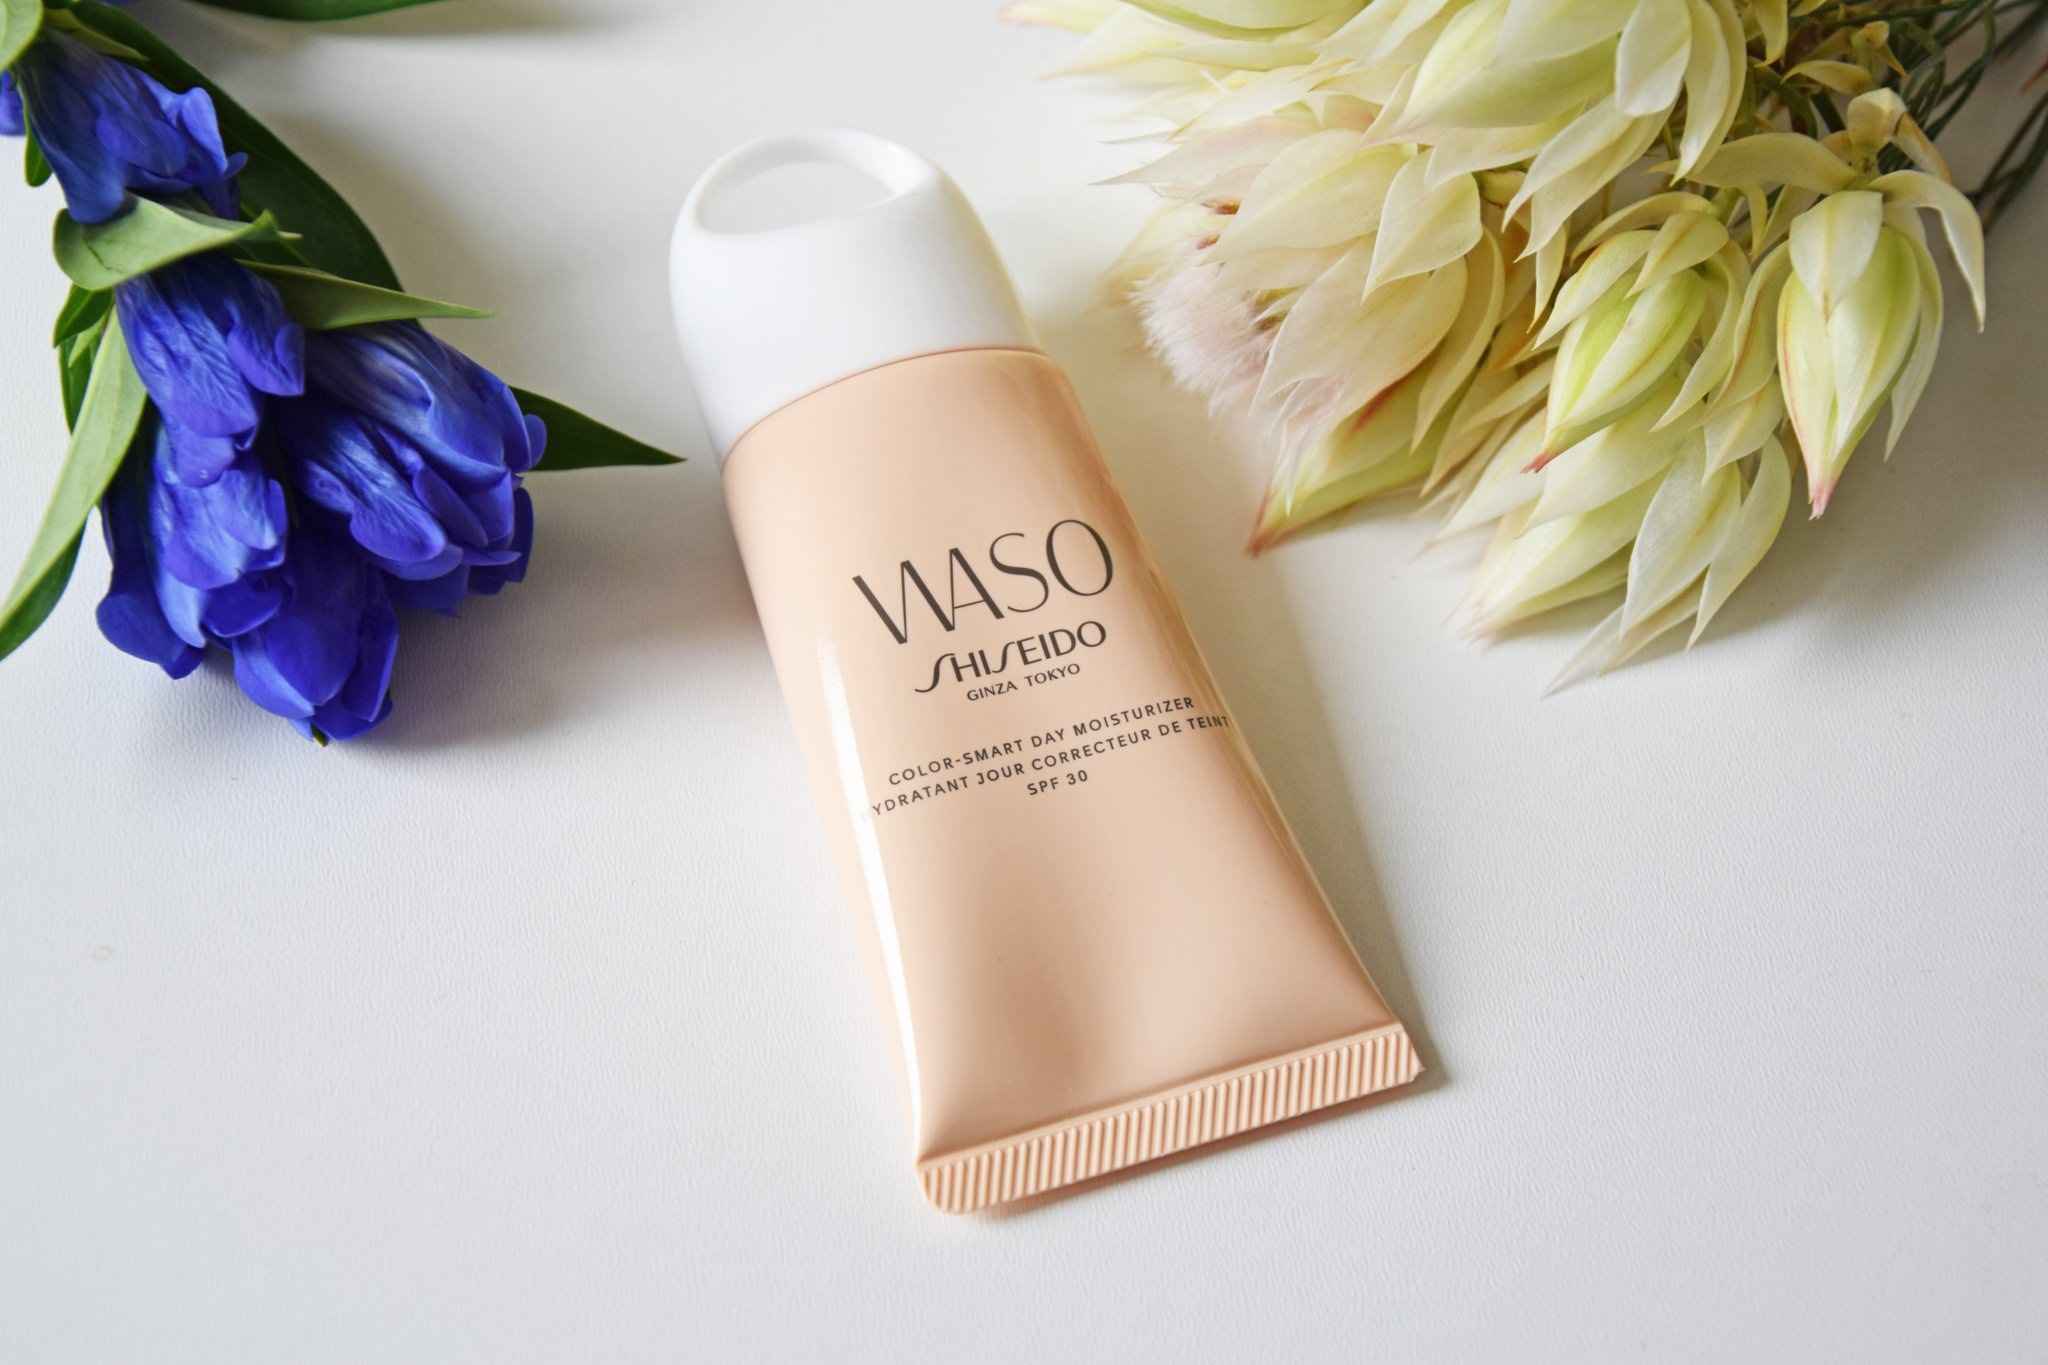 Shiseido - WASO: Color-smart Day Moisturizer SPF30